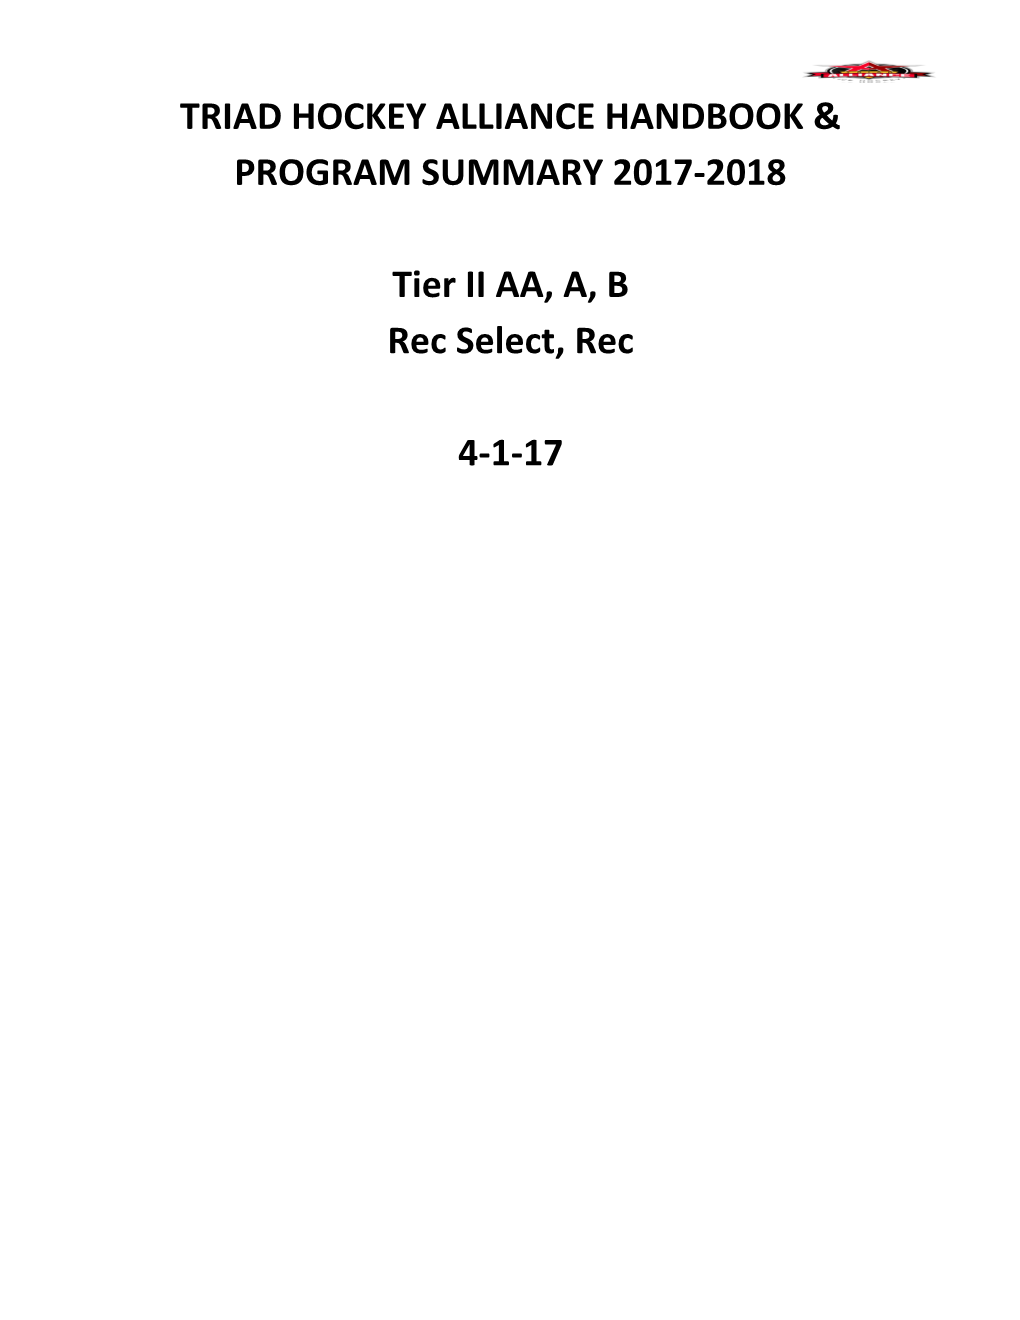 Triad Hockey Alliance Handbook & Program Summary 2017-2018